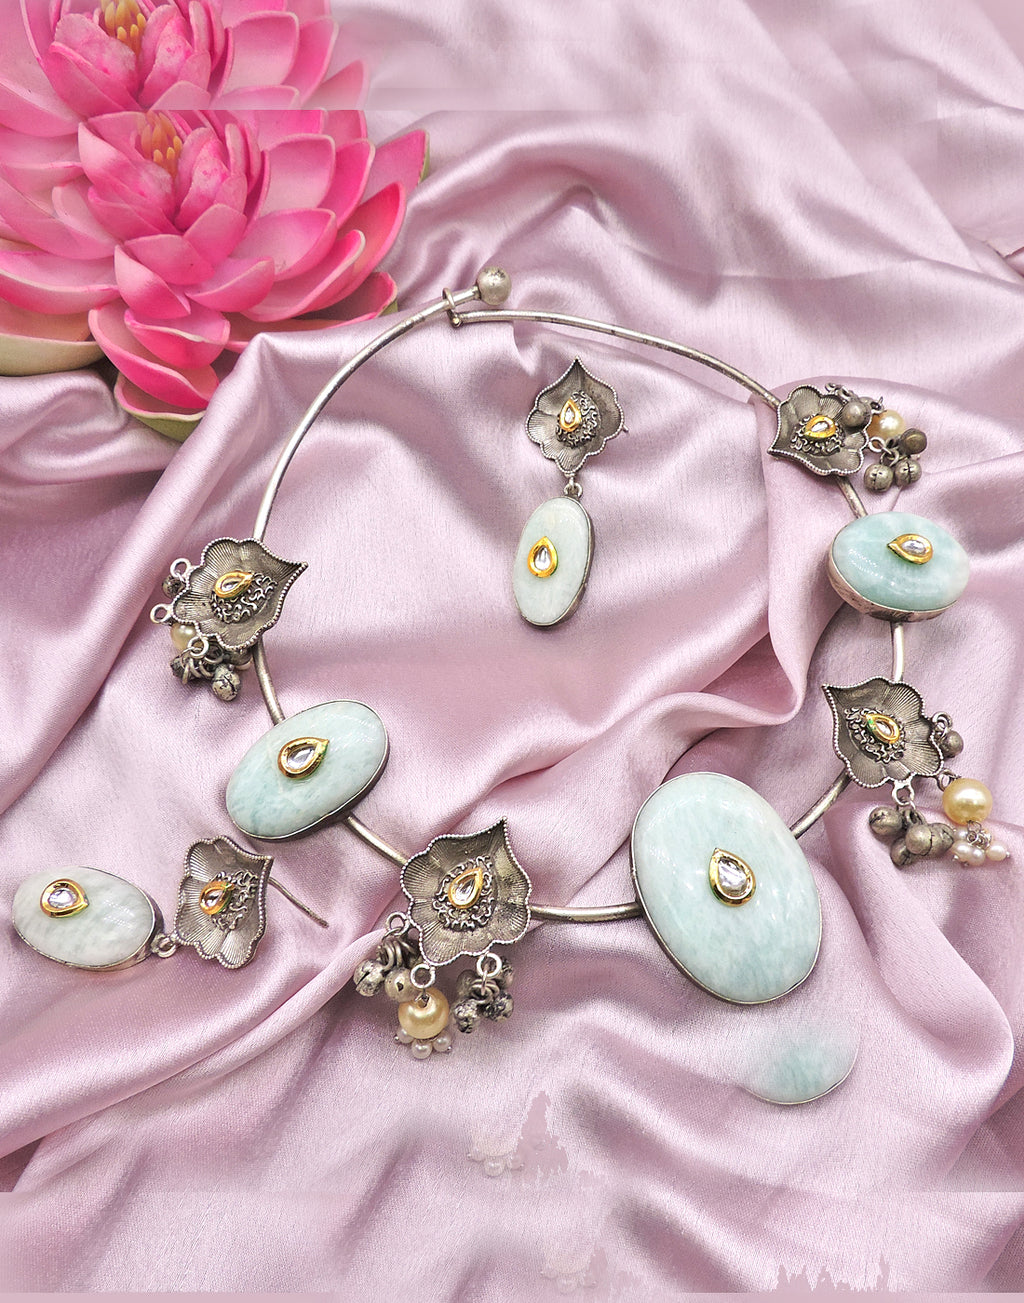 Silver Flower Earrings - Statement Earrings - Gold-Plated & Hypoallergenic Jewellery - Made in India - Dubai Jewellery - Dori